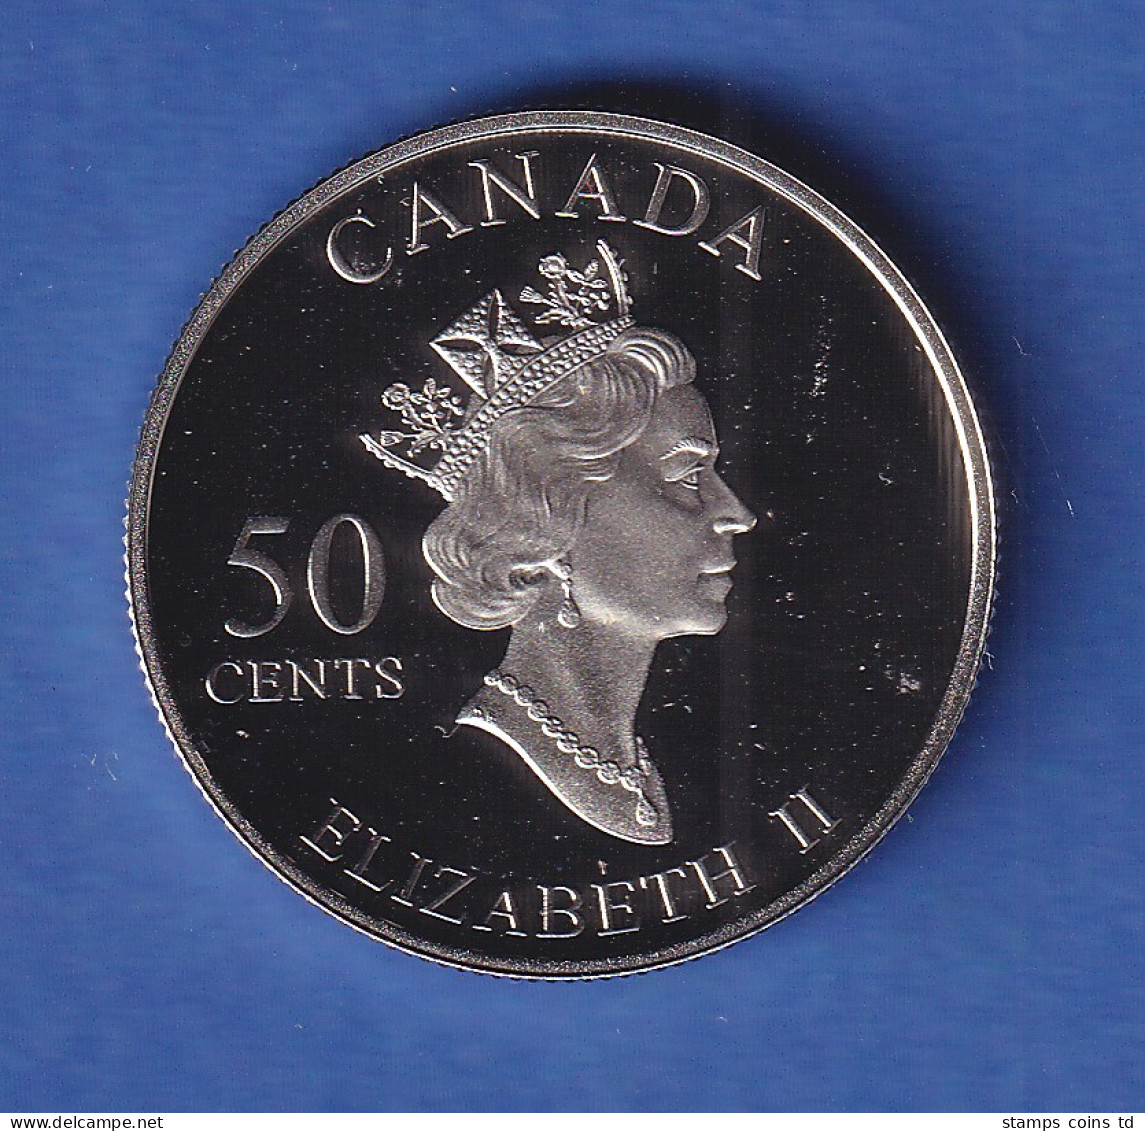 Silbermünze Kanada 2003 Golden Daffodil 50 Cent 9,3g Ag925 PP In Kapsel - Canada